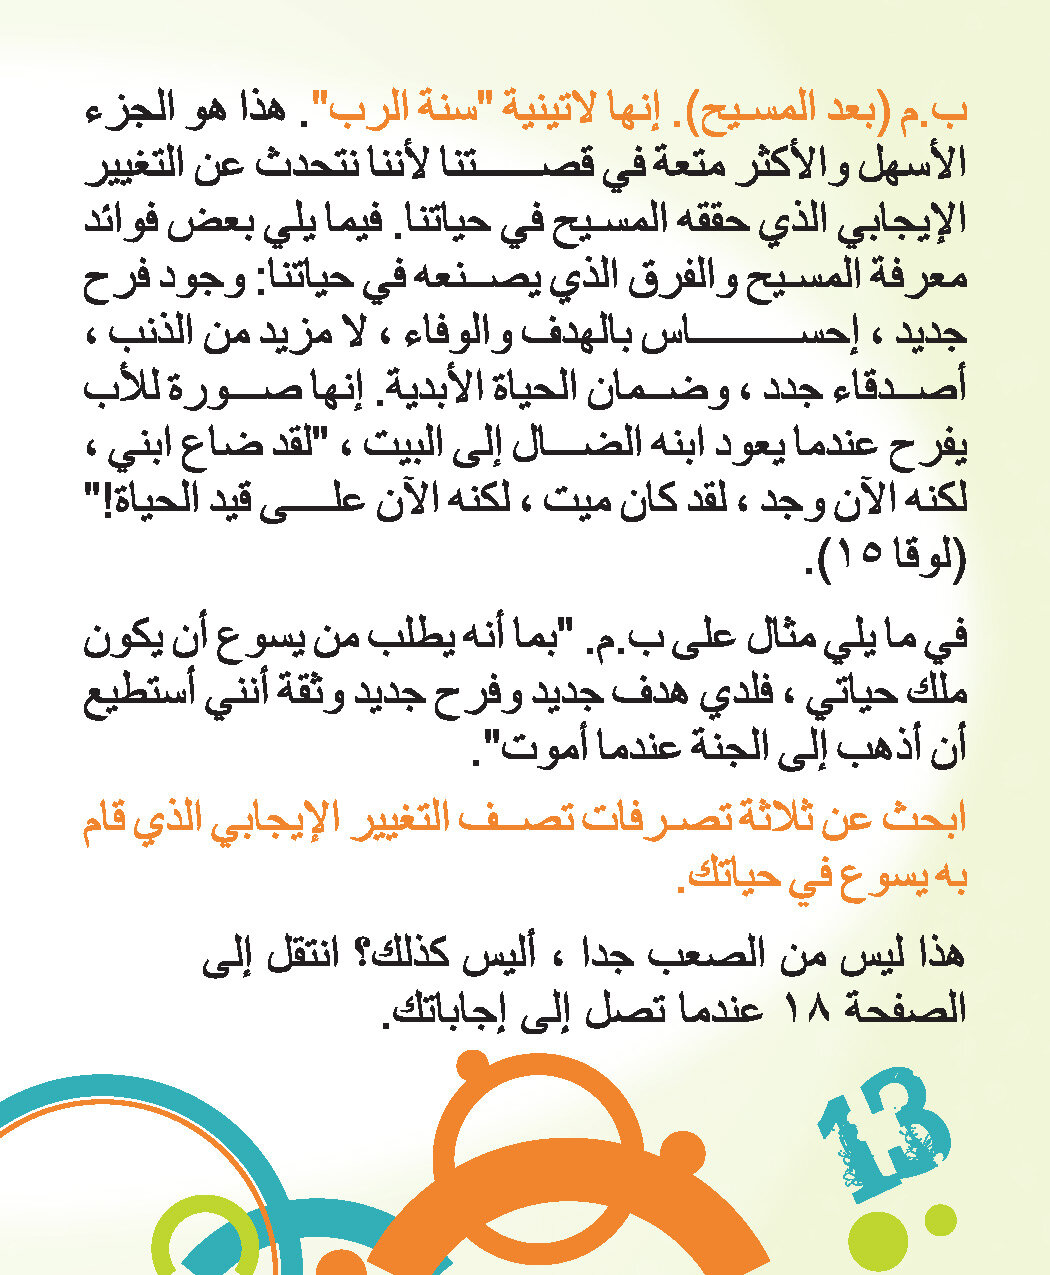 Arabic_Zubi_CDR-based_Page_14.jpg